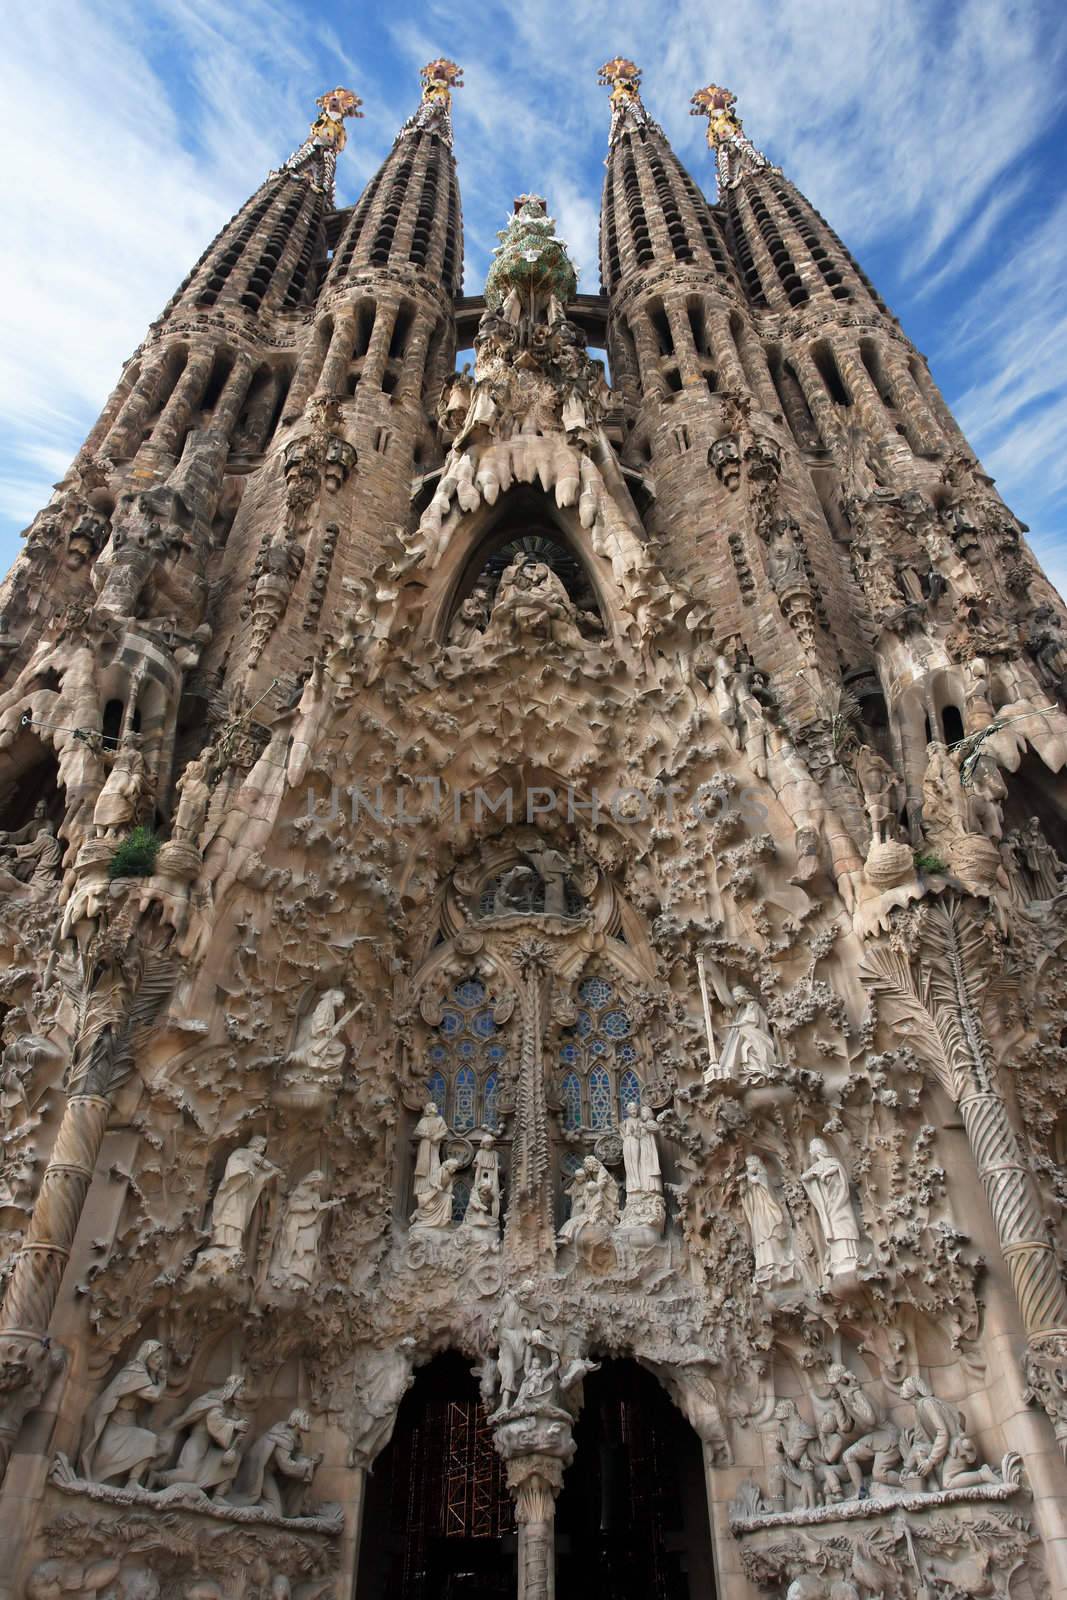 The unfinished church of Sagrada Familia in Barcelona Spain.
